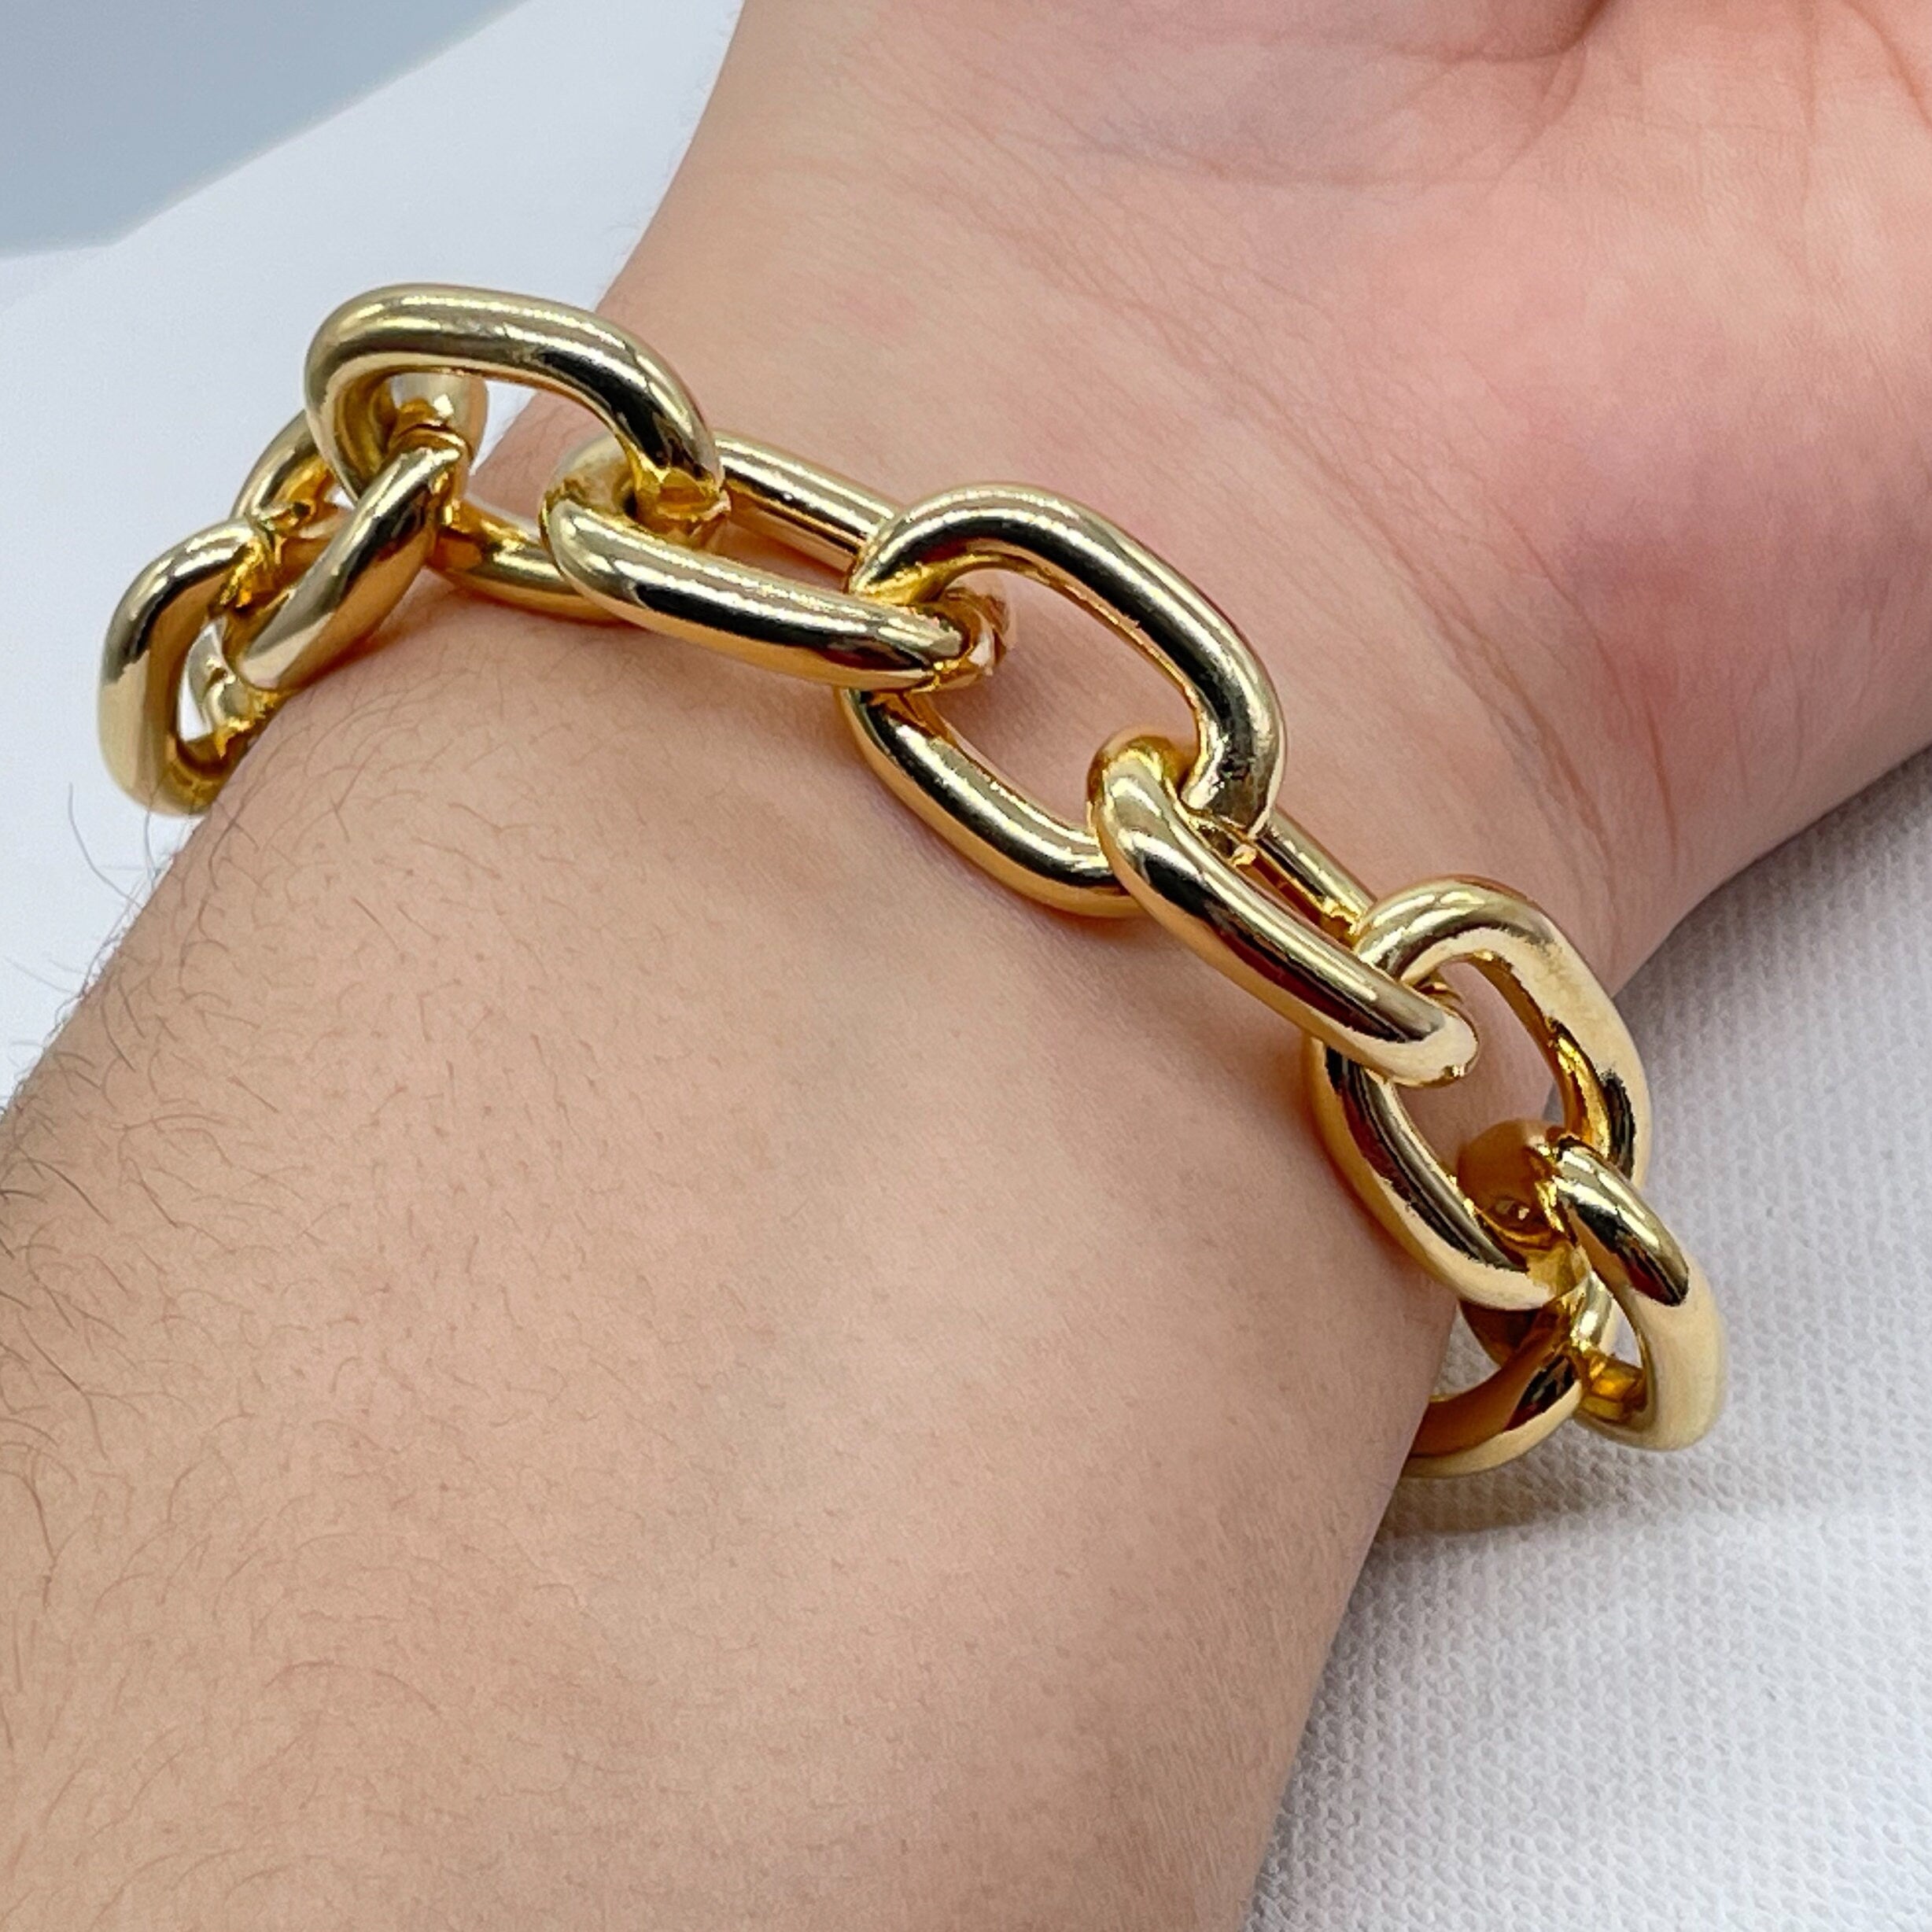 Buy High Quality Ad Stone Chain Bracelet Design for Women